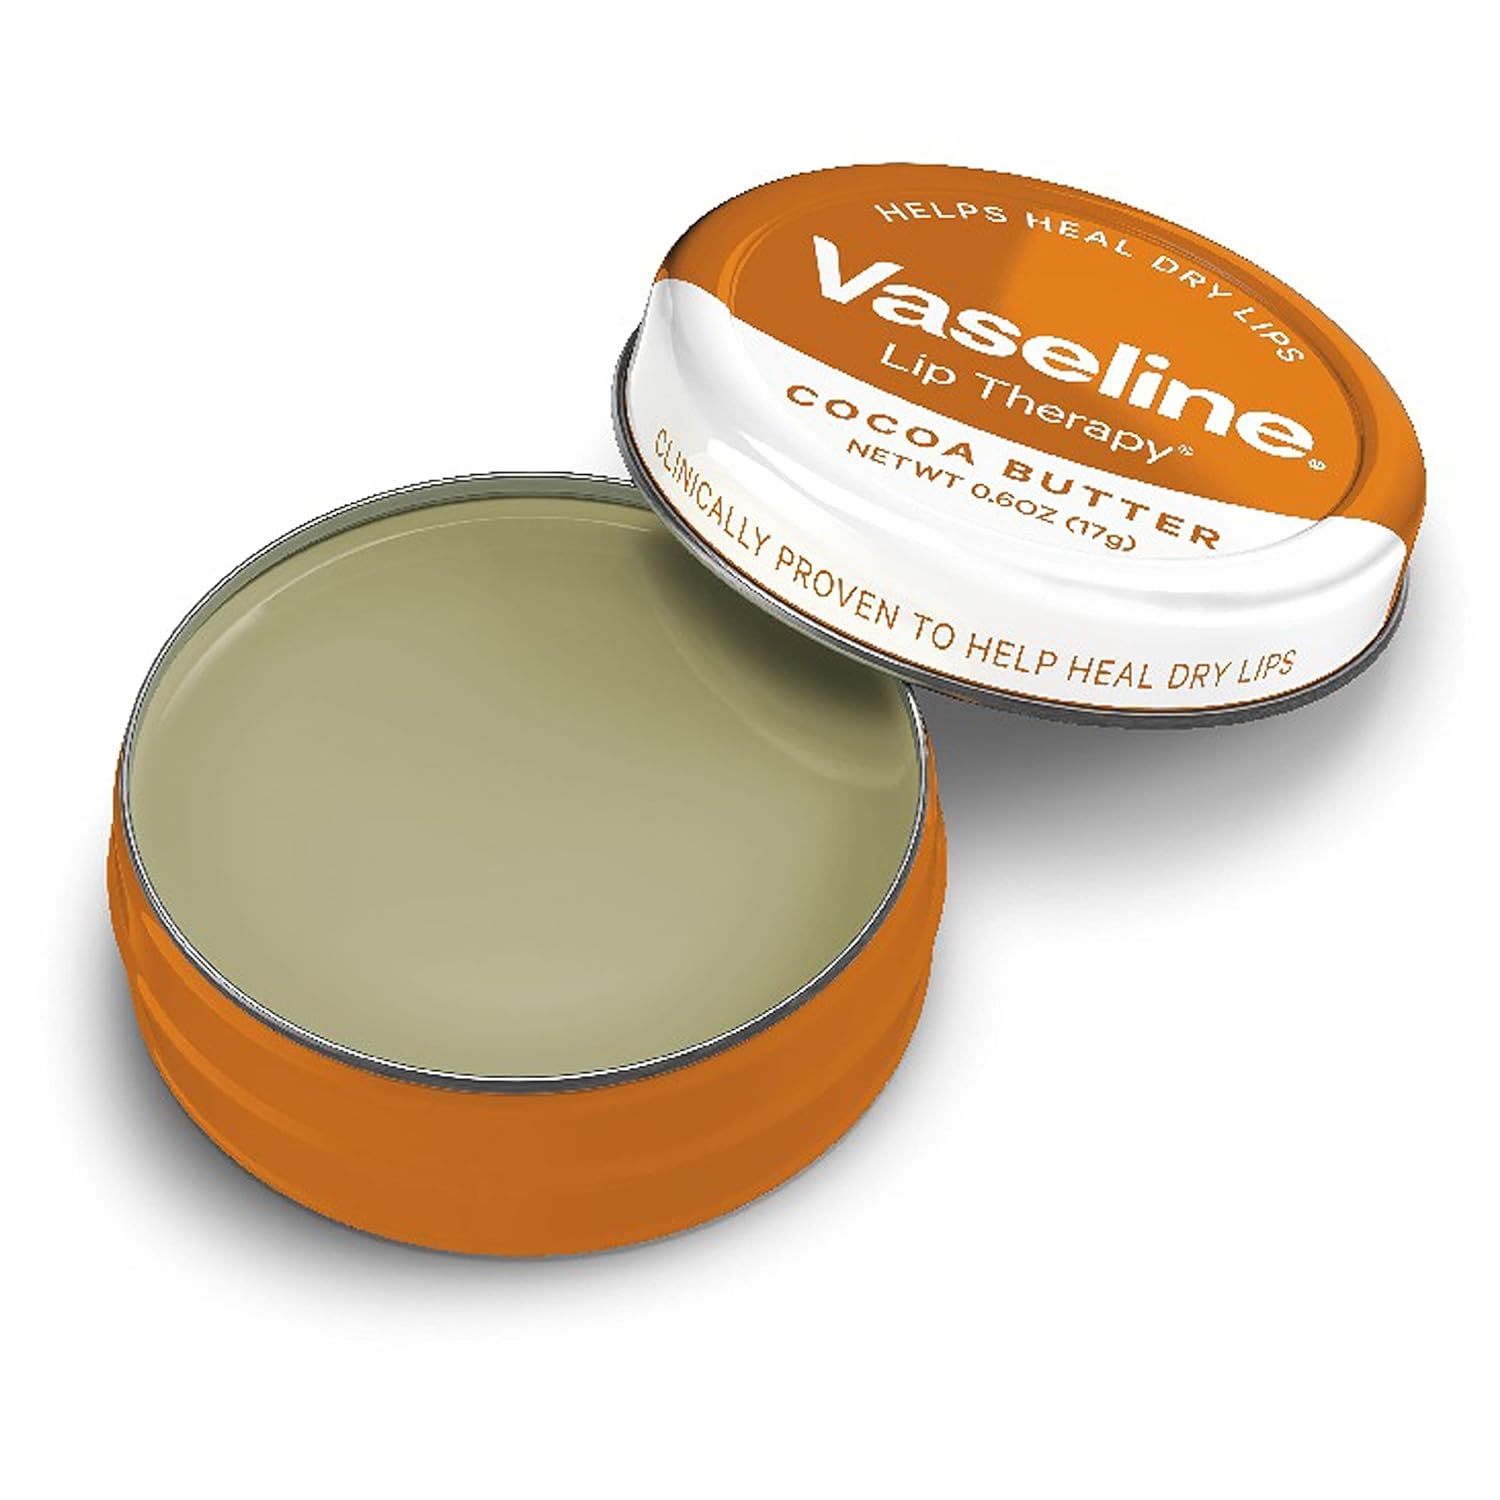 Vaseline Lip Therapy Lip Balm Tin, Cocoa Butter, 0.6 oz : Beauty & Personal Care